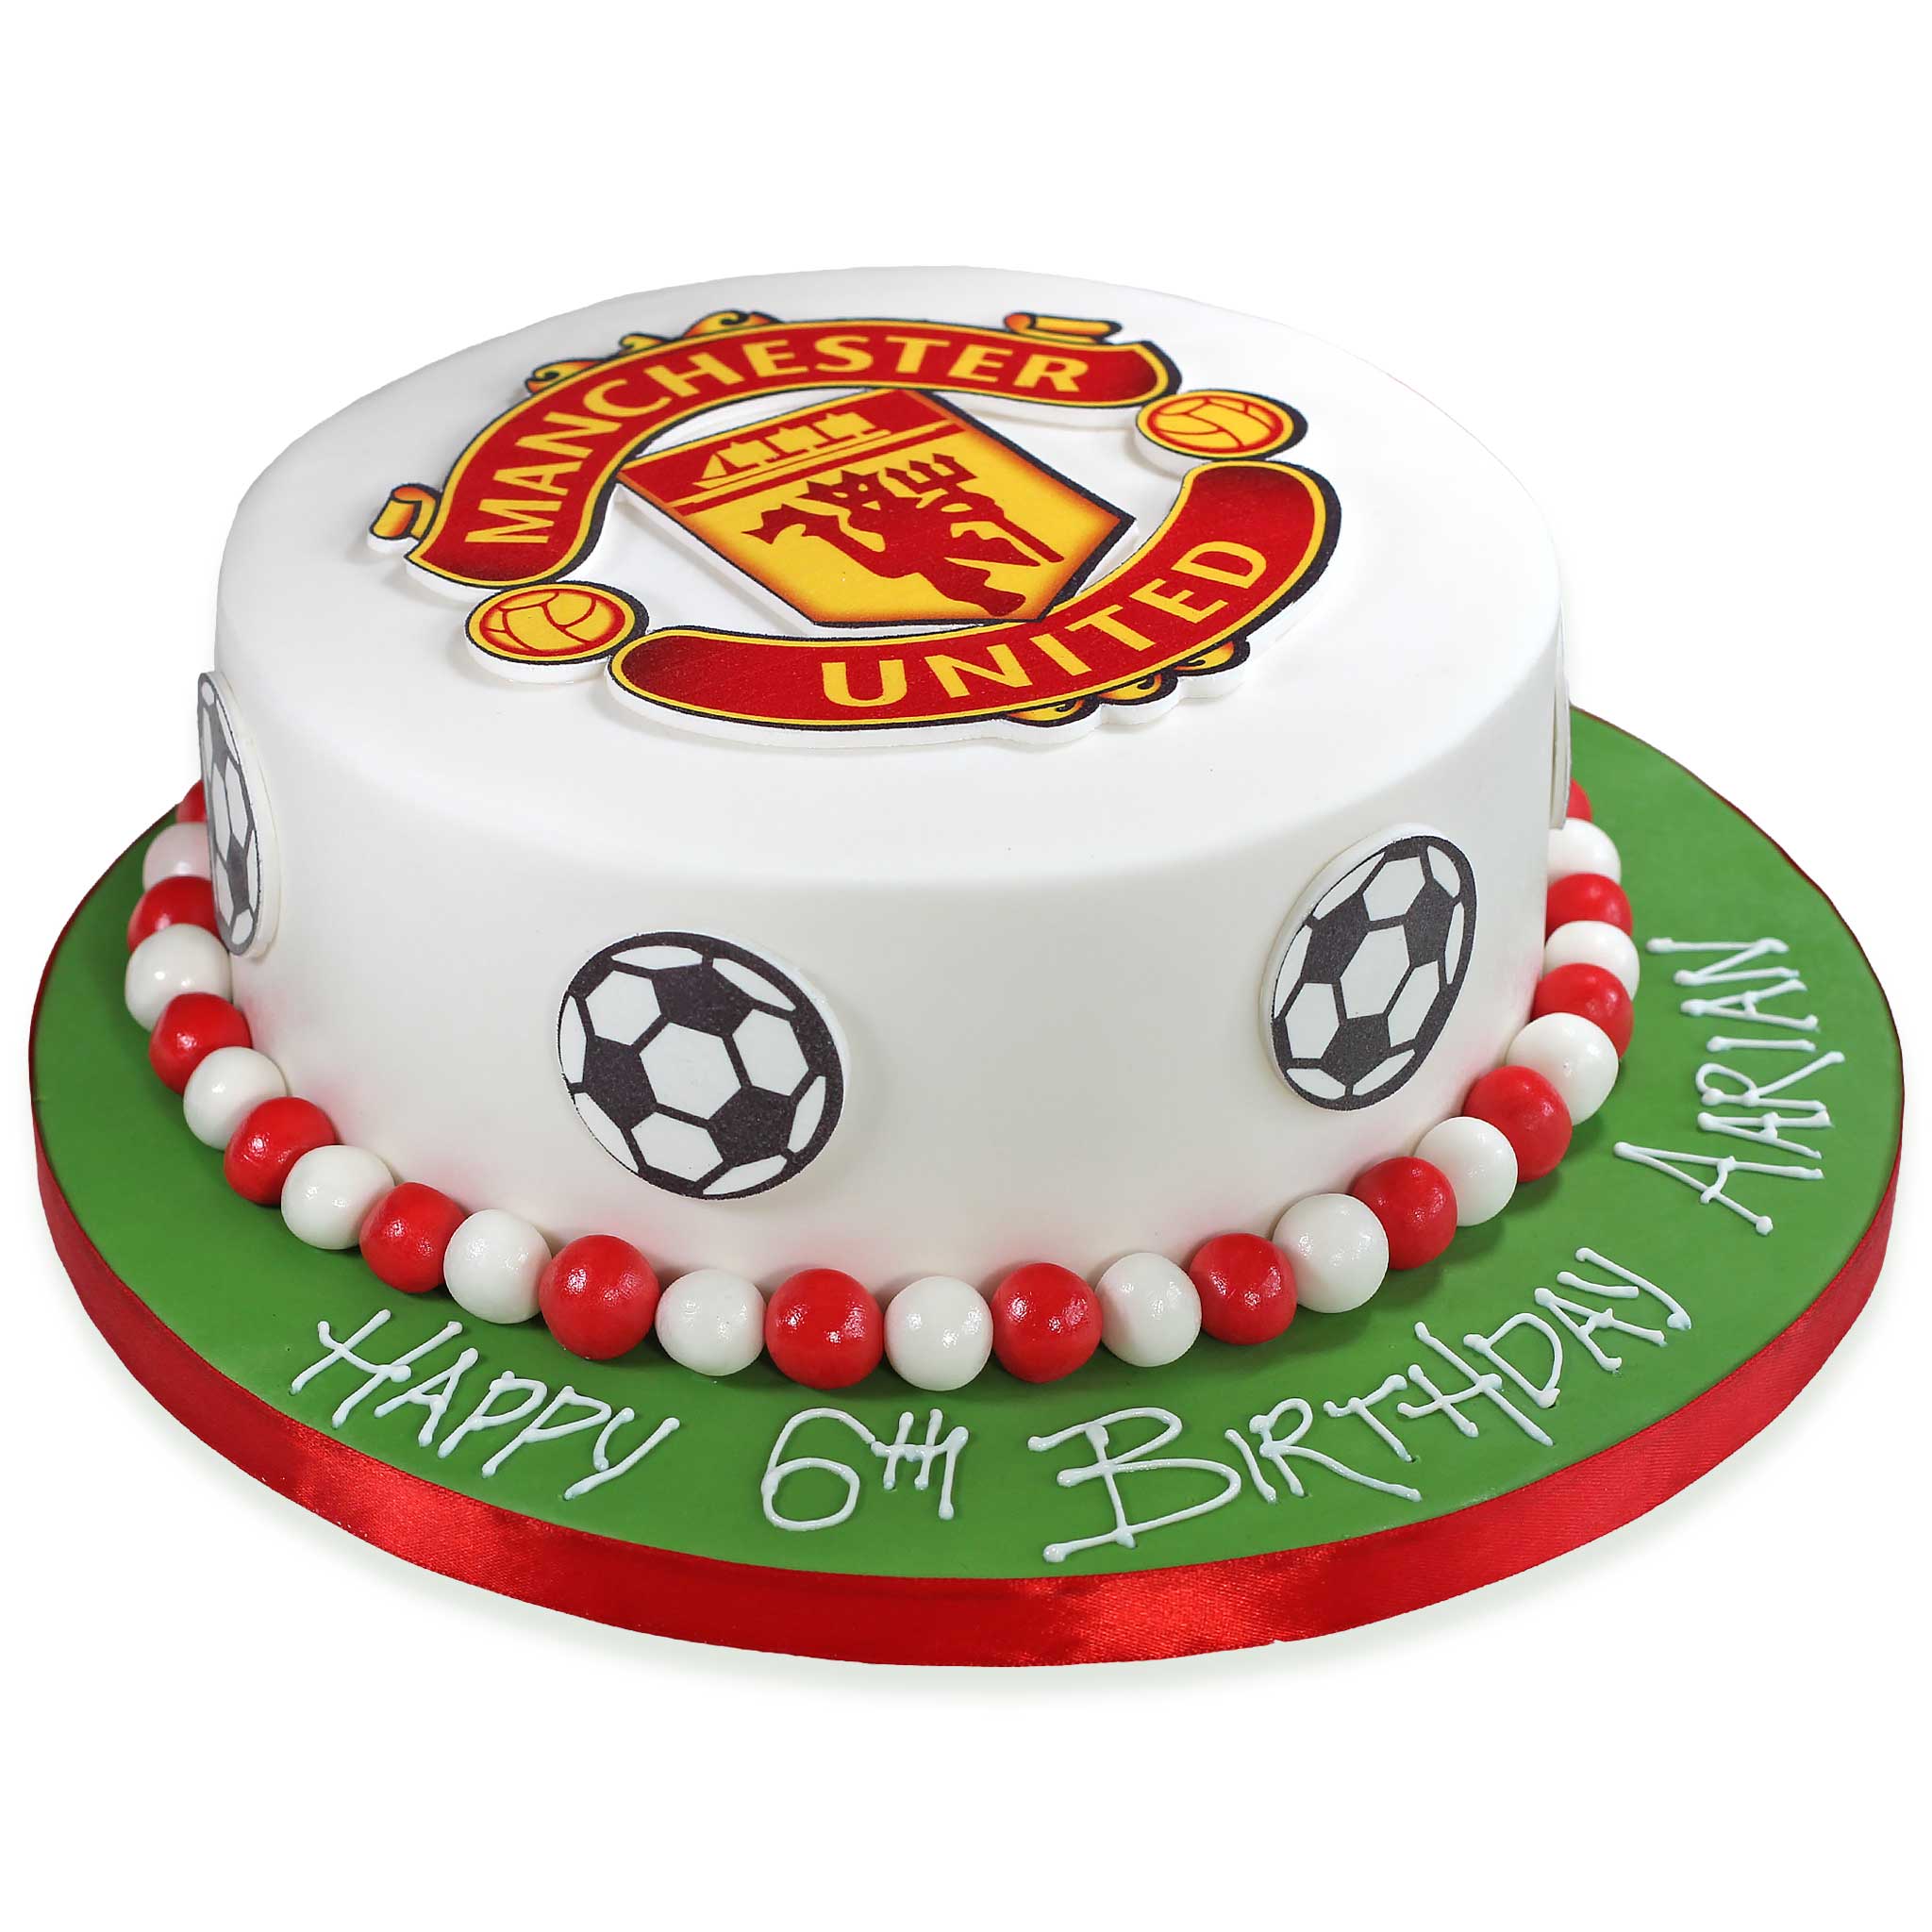 Manchester United cake, Food & Drinks, Homemade Bakes on Carousell